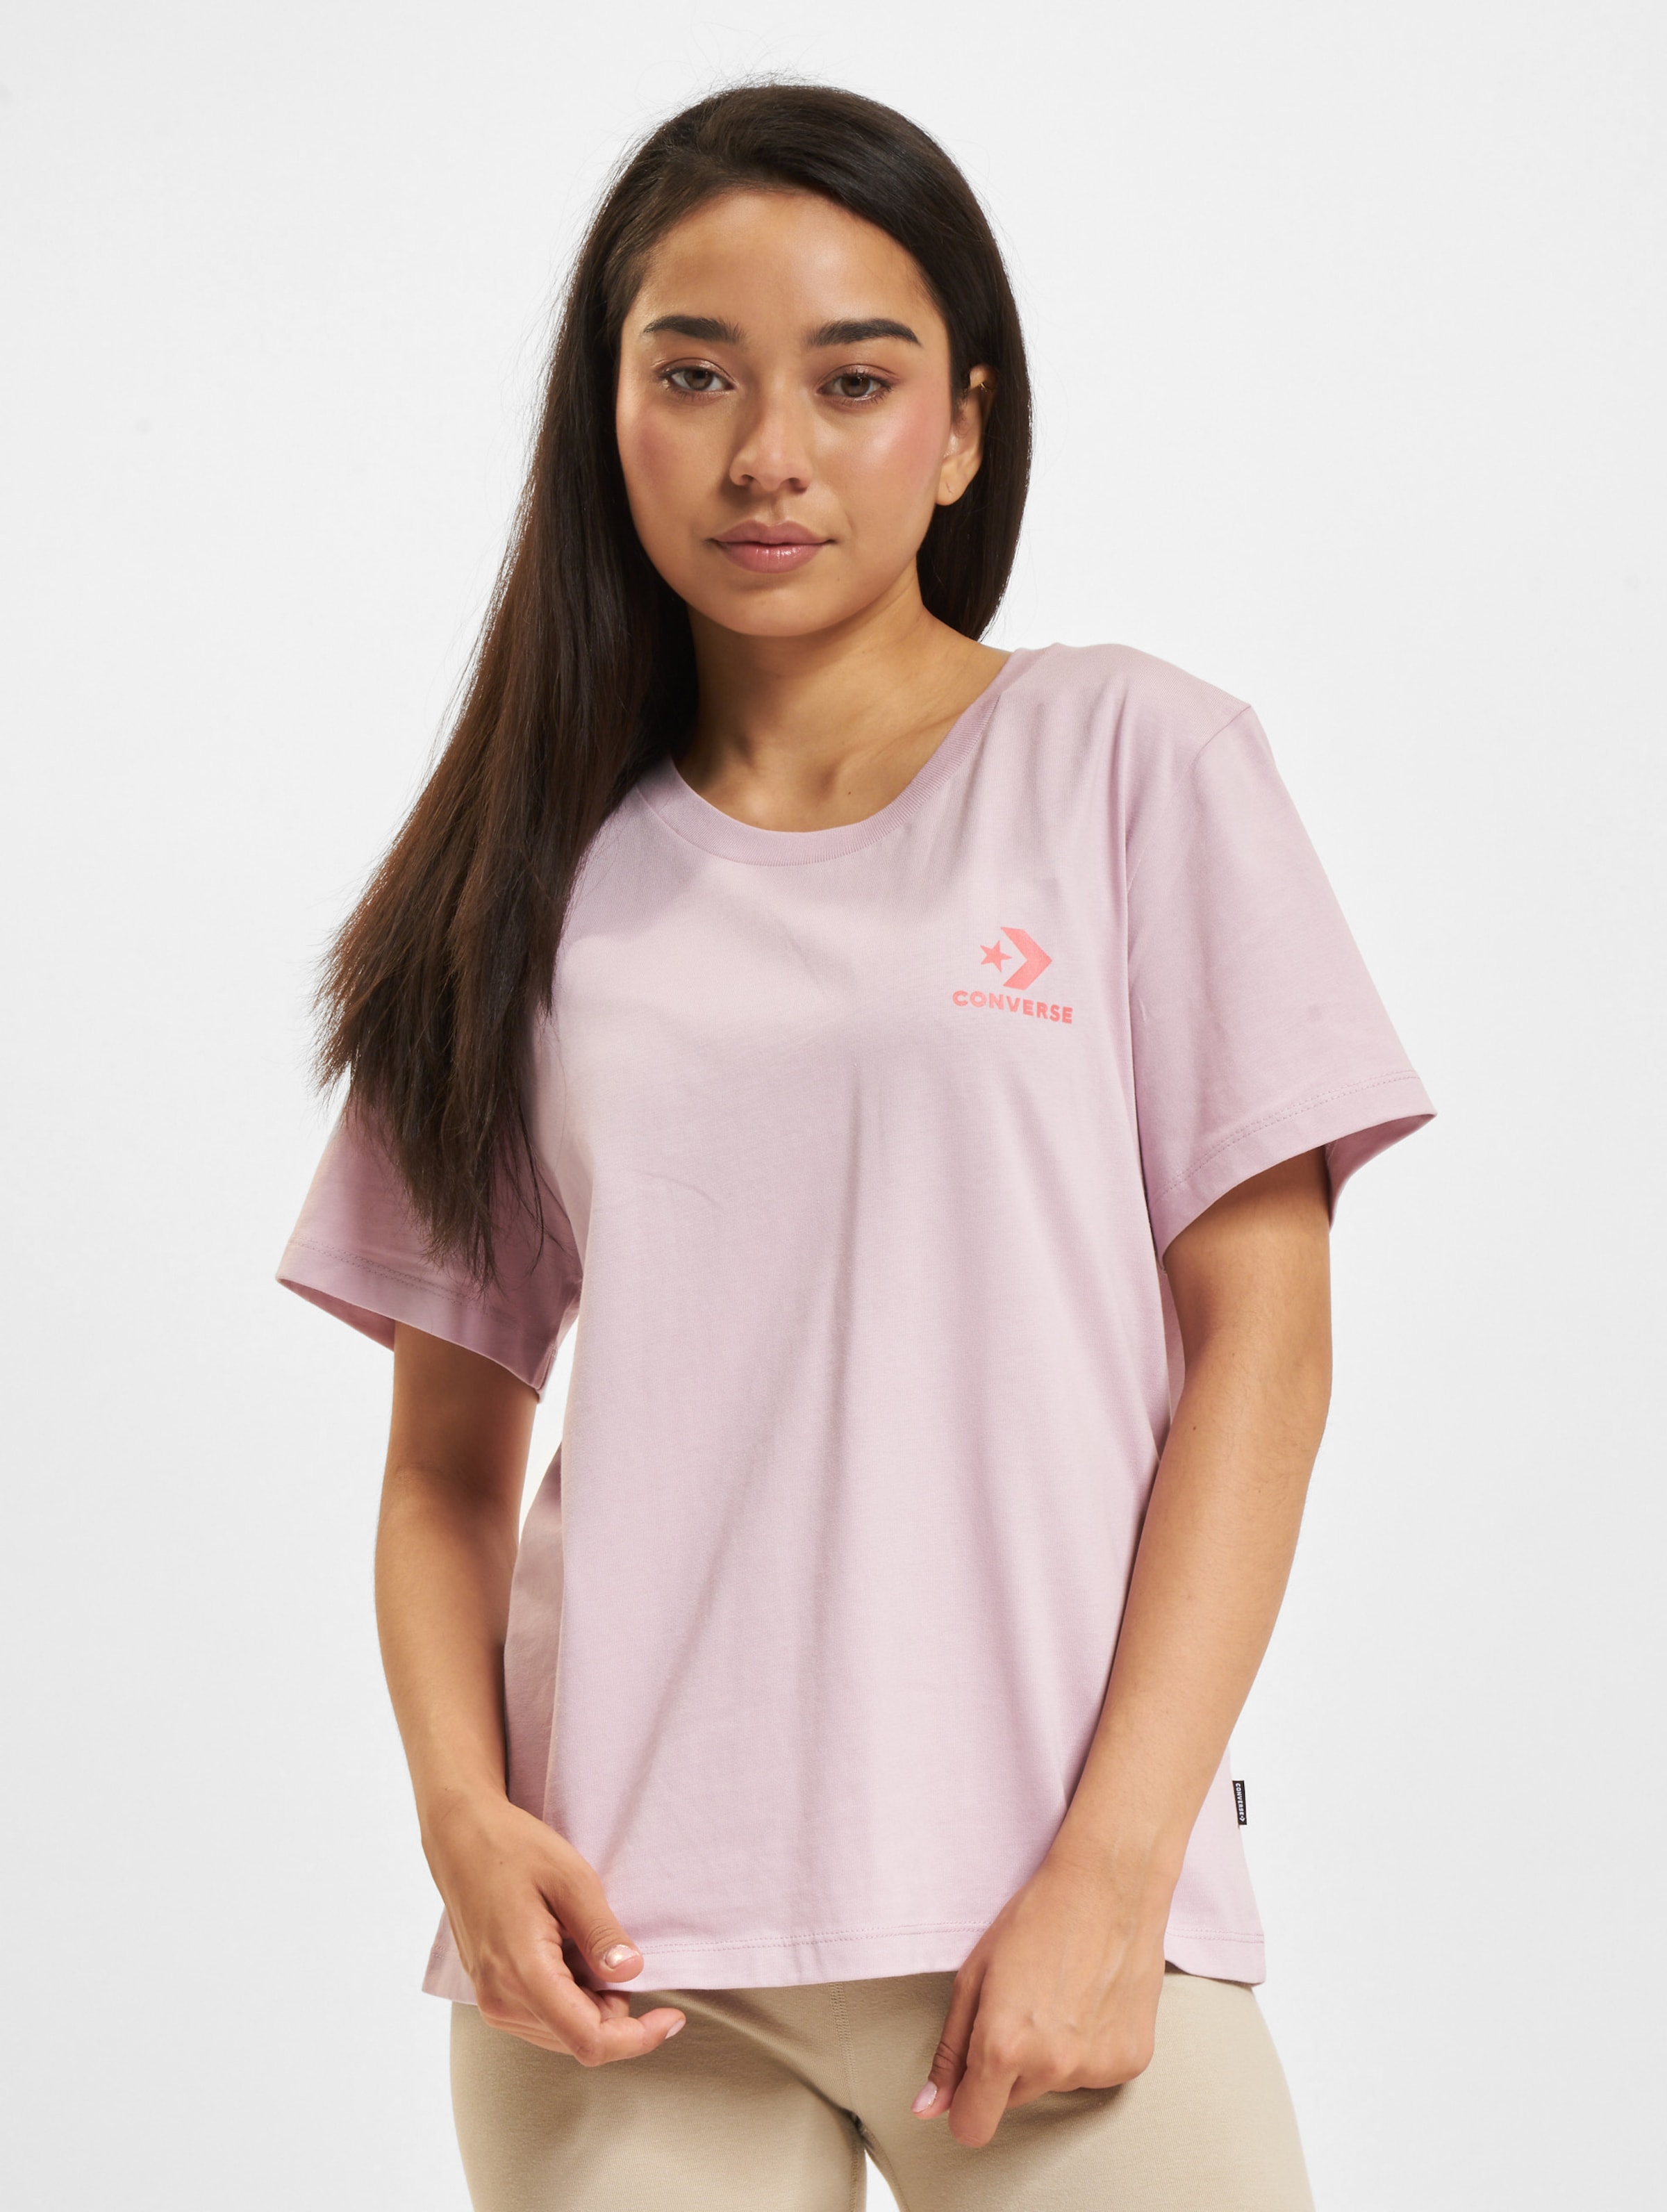 Converse No Problem Classic T-Shirt Frauen,Unisex op kleur roze, Maat XS